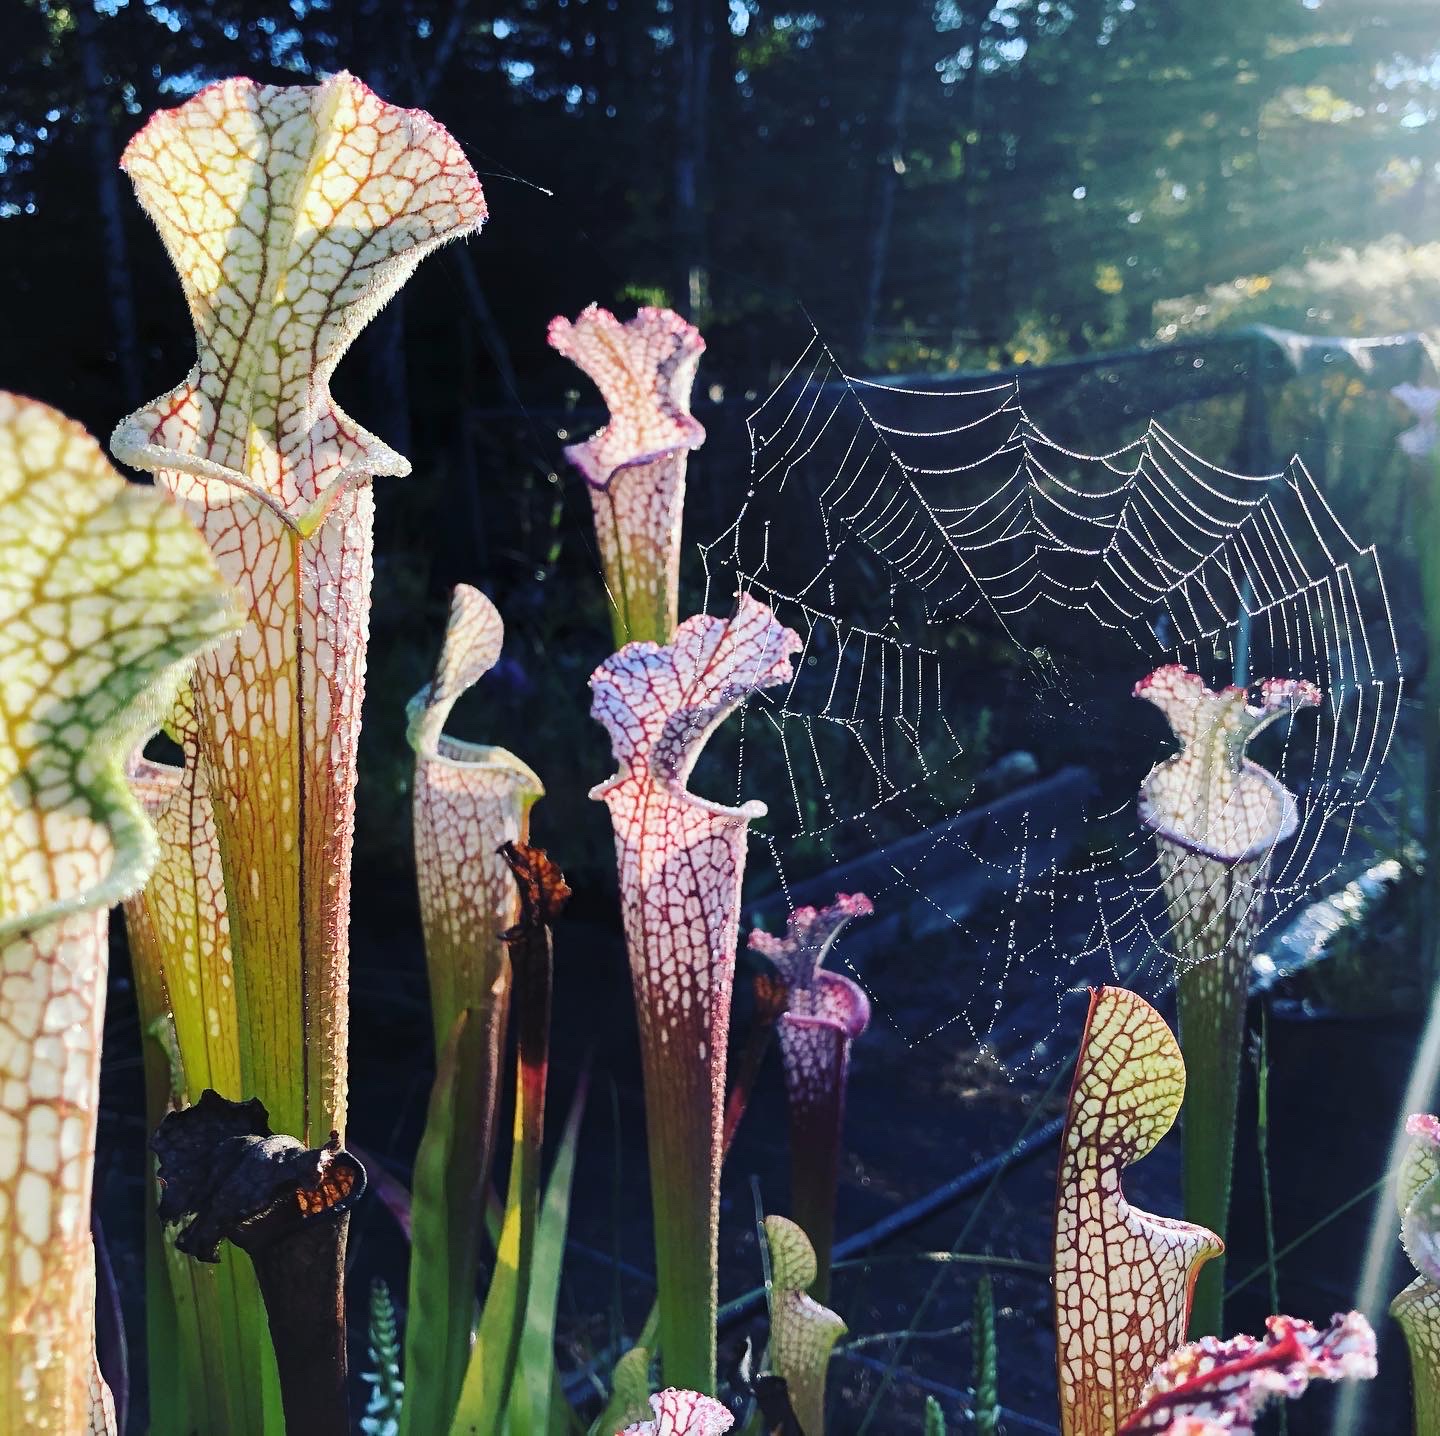 Sarrecenia with spider web